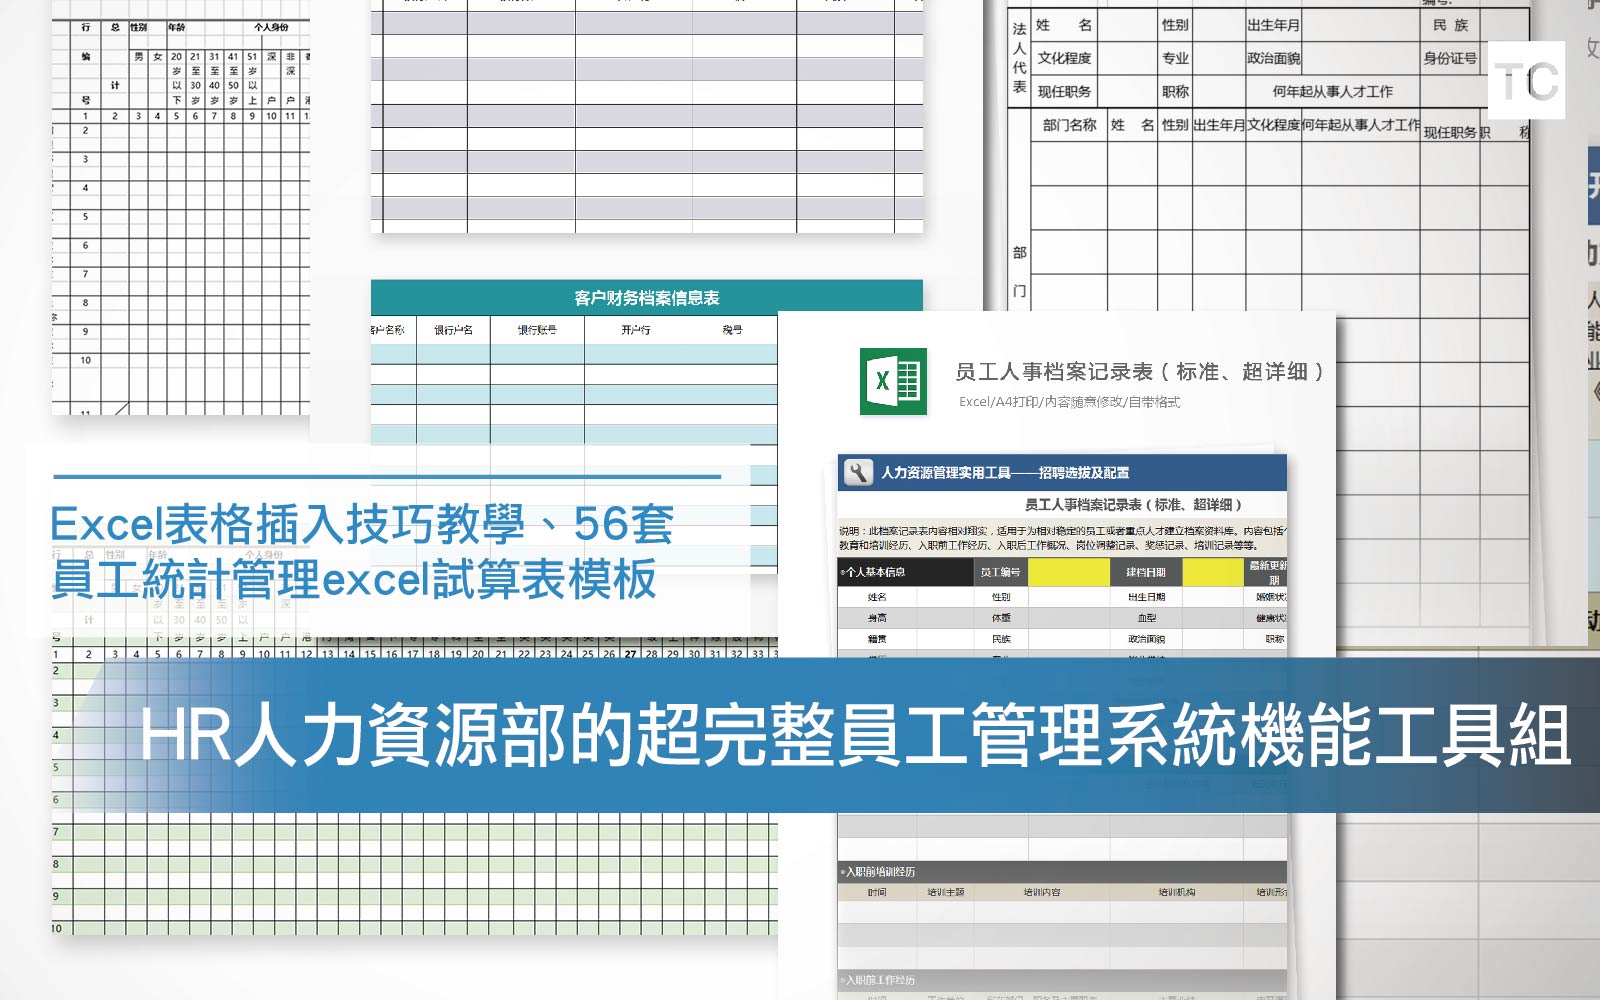 【Excel教學】HR超完整員工統計管理系統